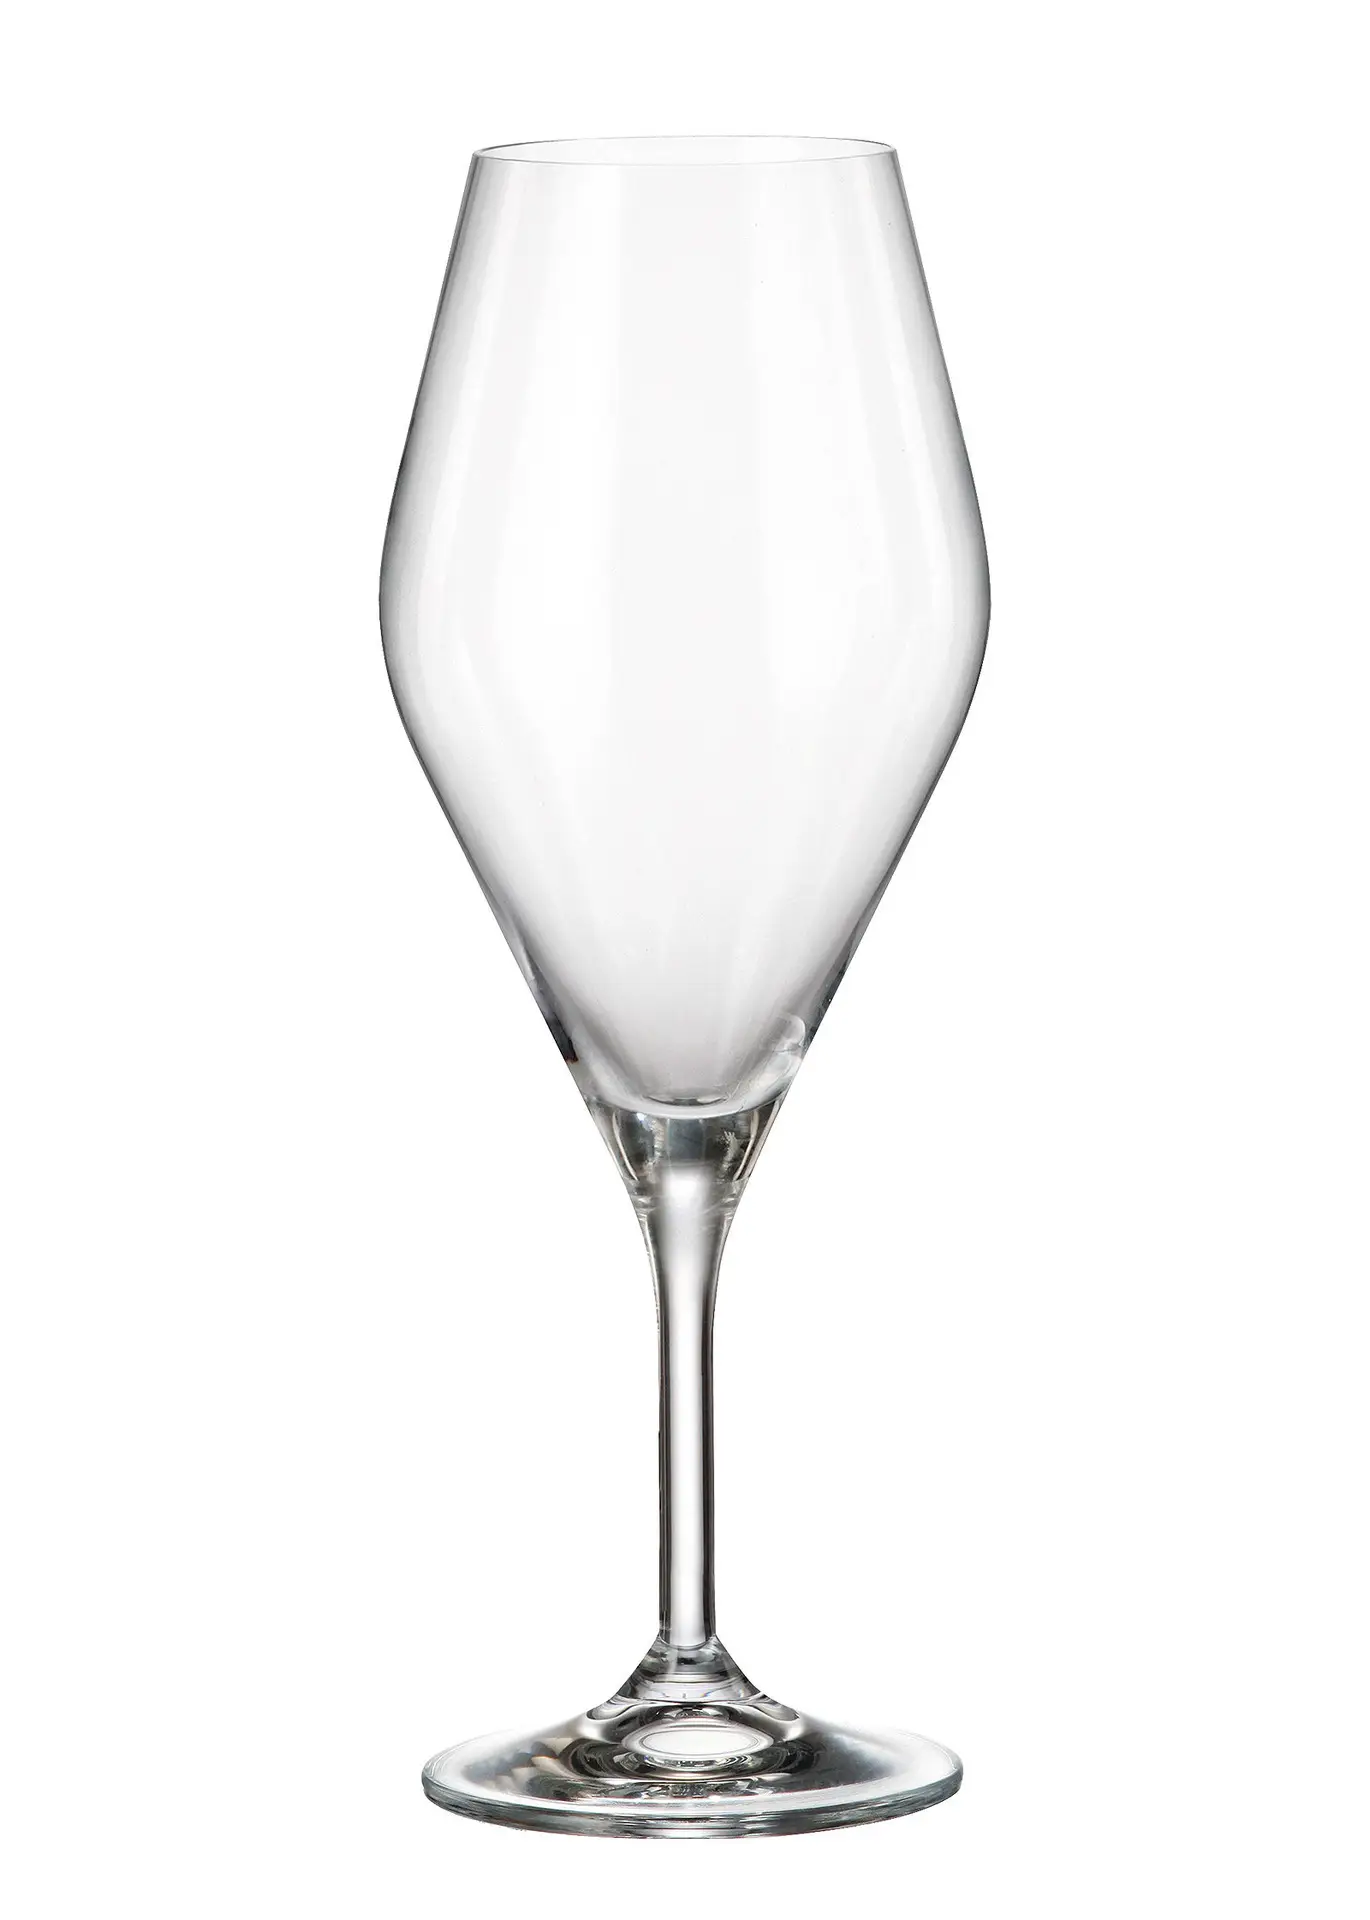 GAVIA WHITE WINE GLASS 300ML CRYSTALEX Bohemia